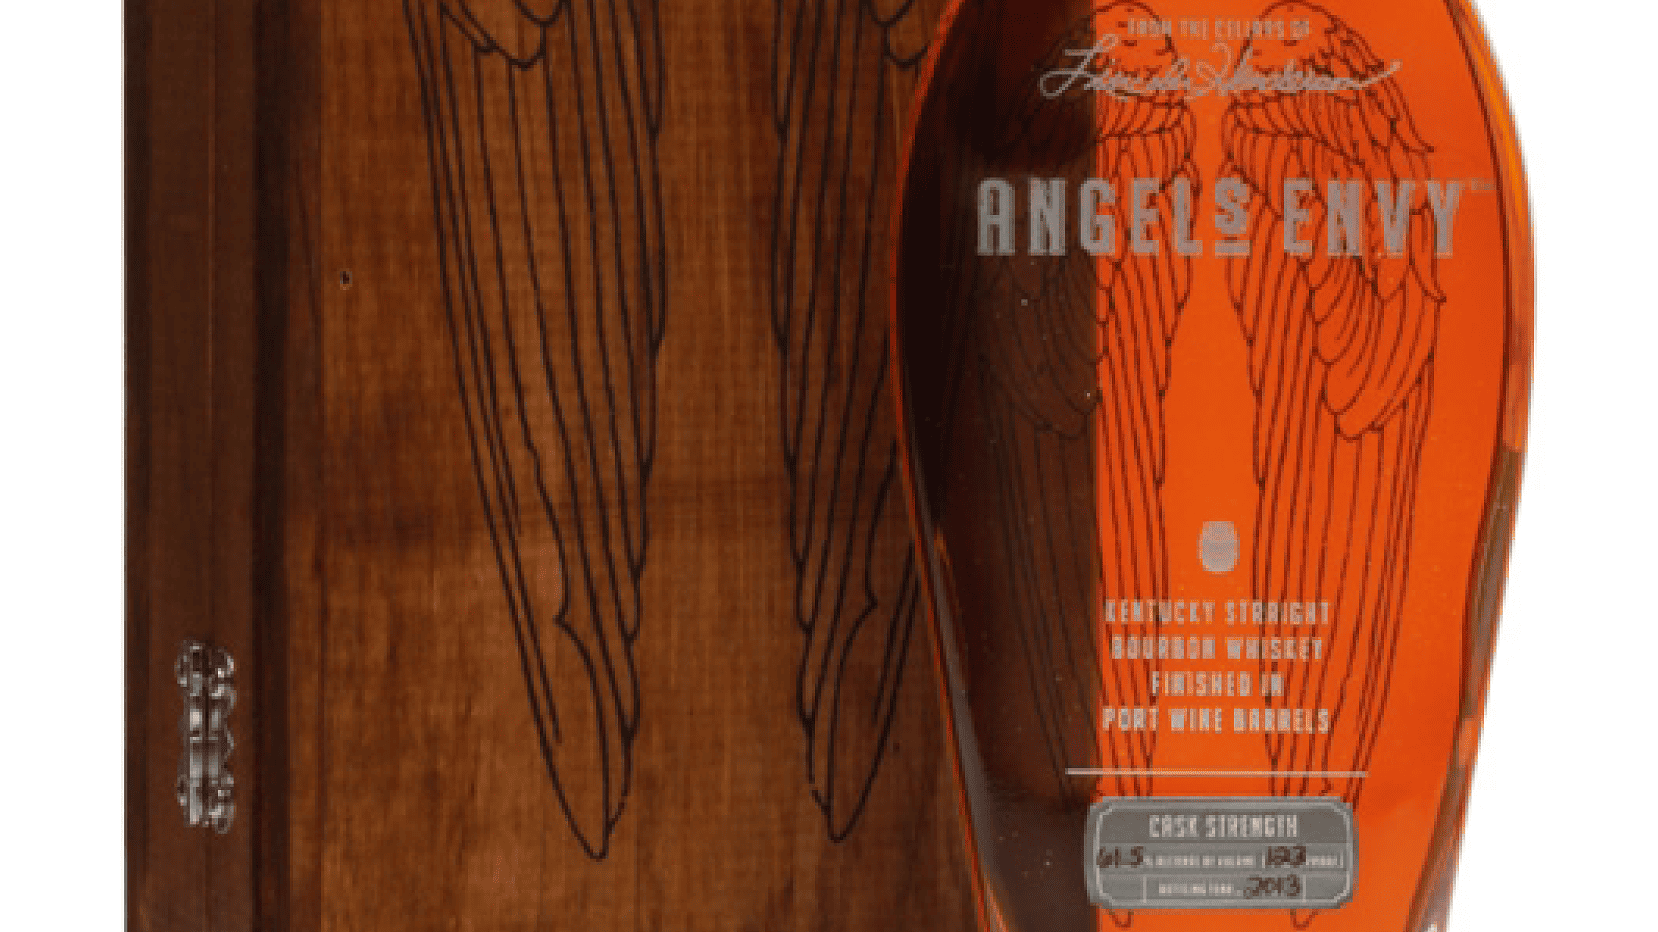 Angel's envy bourbon bottle and box